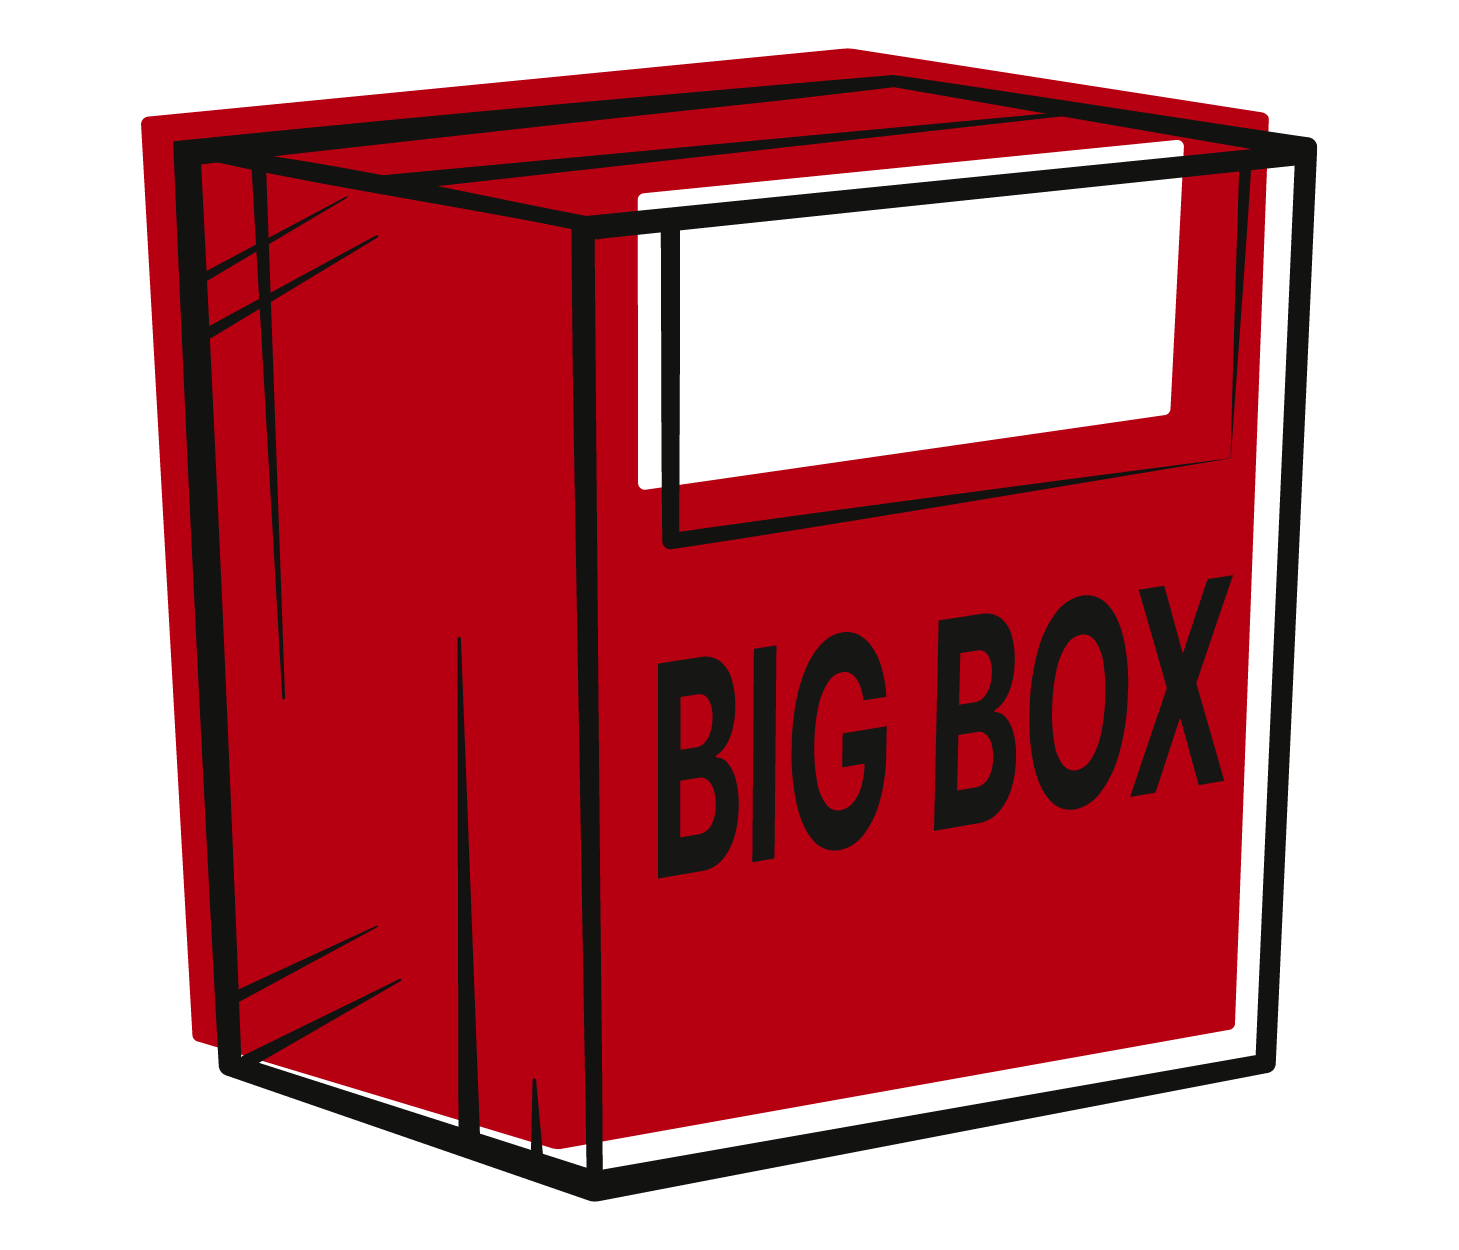 Die Rote Box "Big Box"